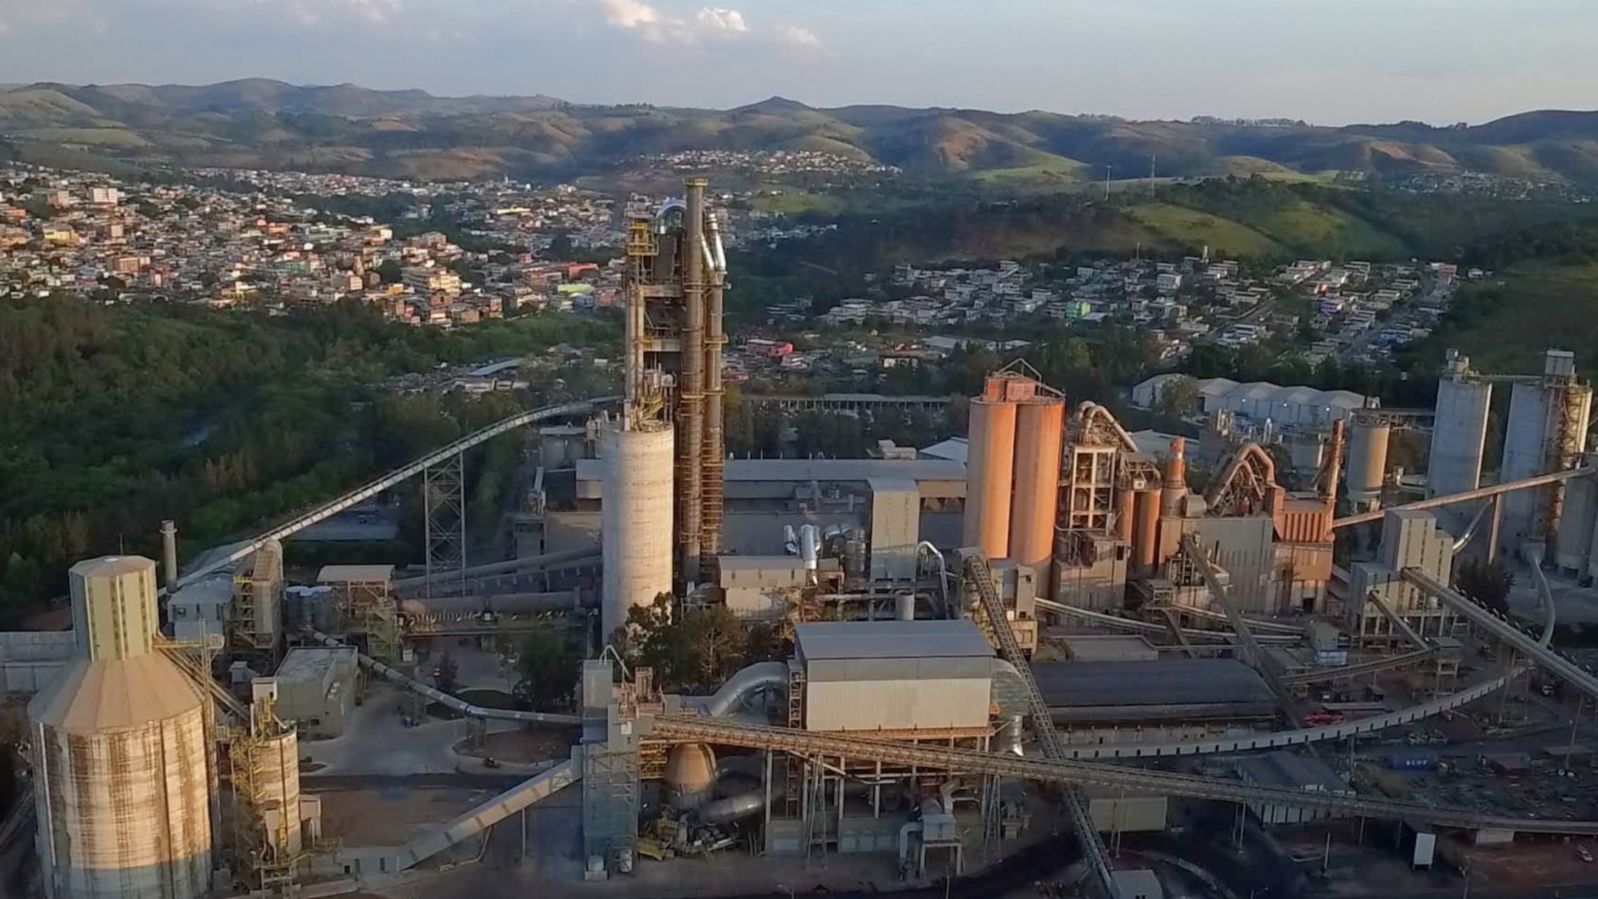 Birds eye view of LafargeHolcim Cement Plant in Barroso, Brazil